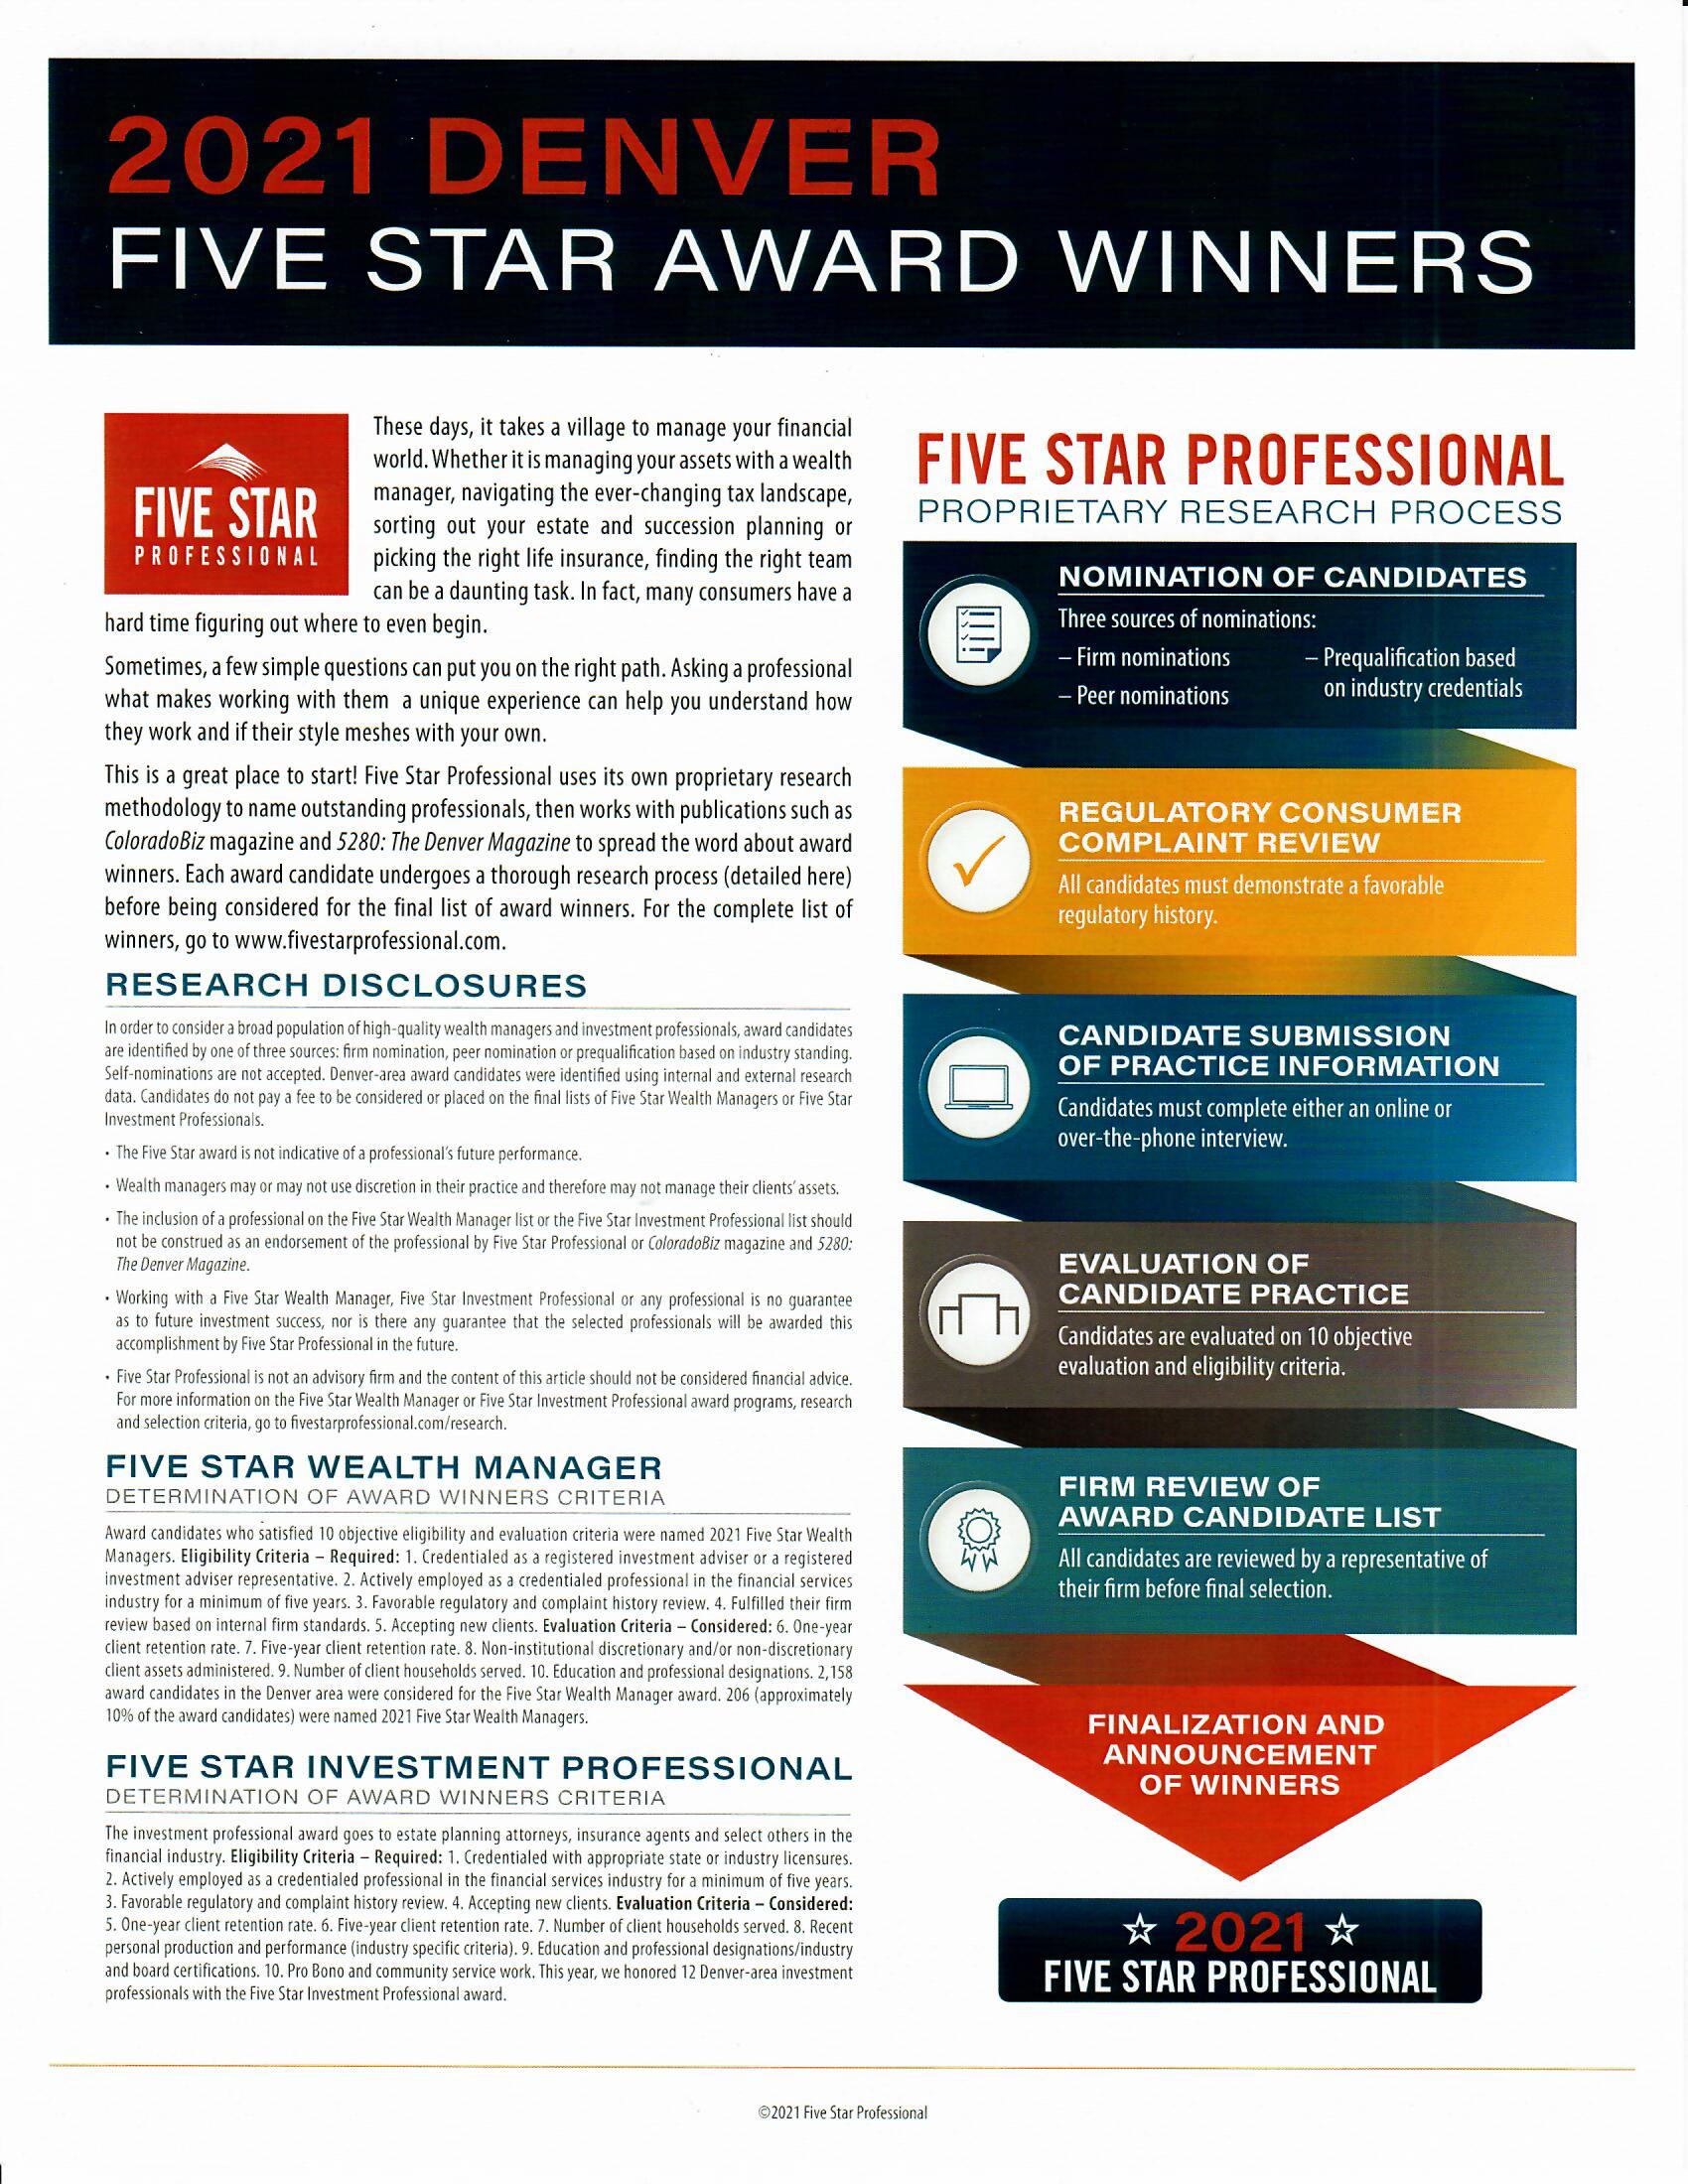 2021 Five Star Award Winners — Greenwood Village, CO — Integra Financial Inc